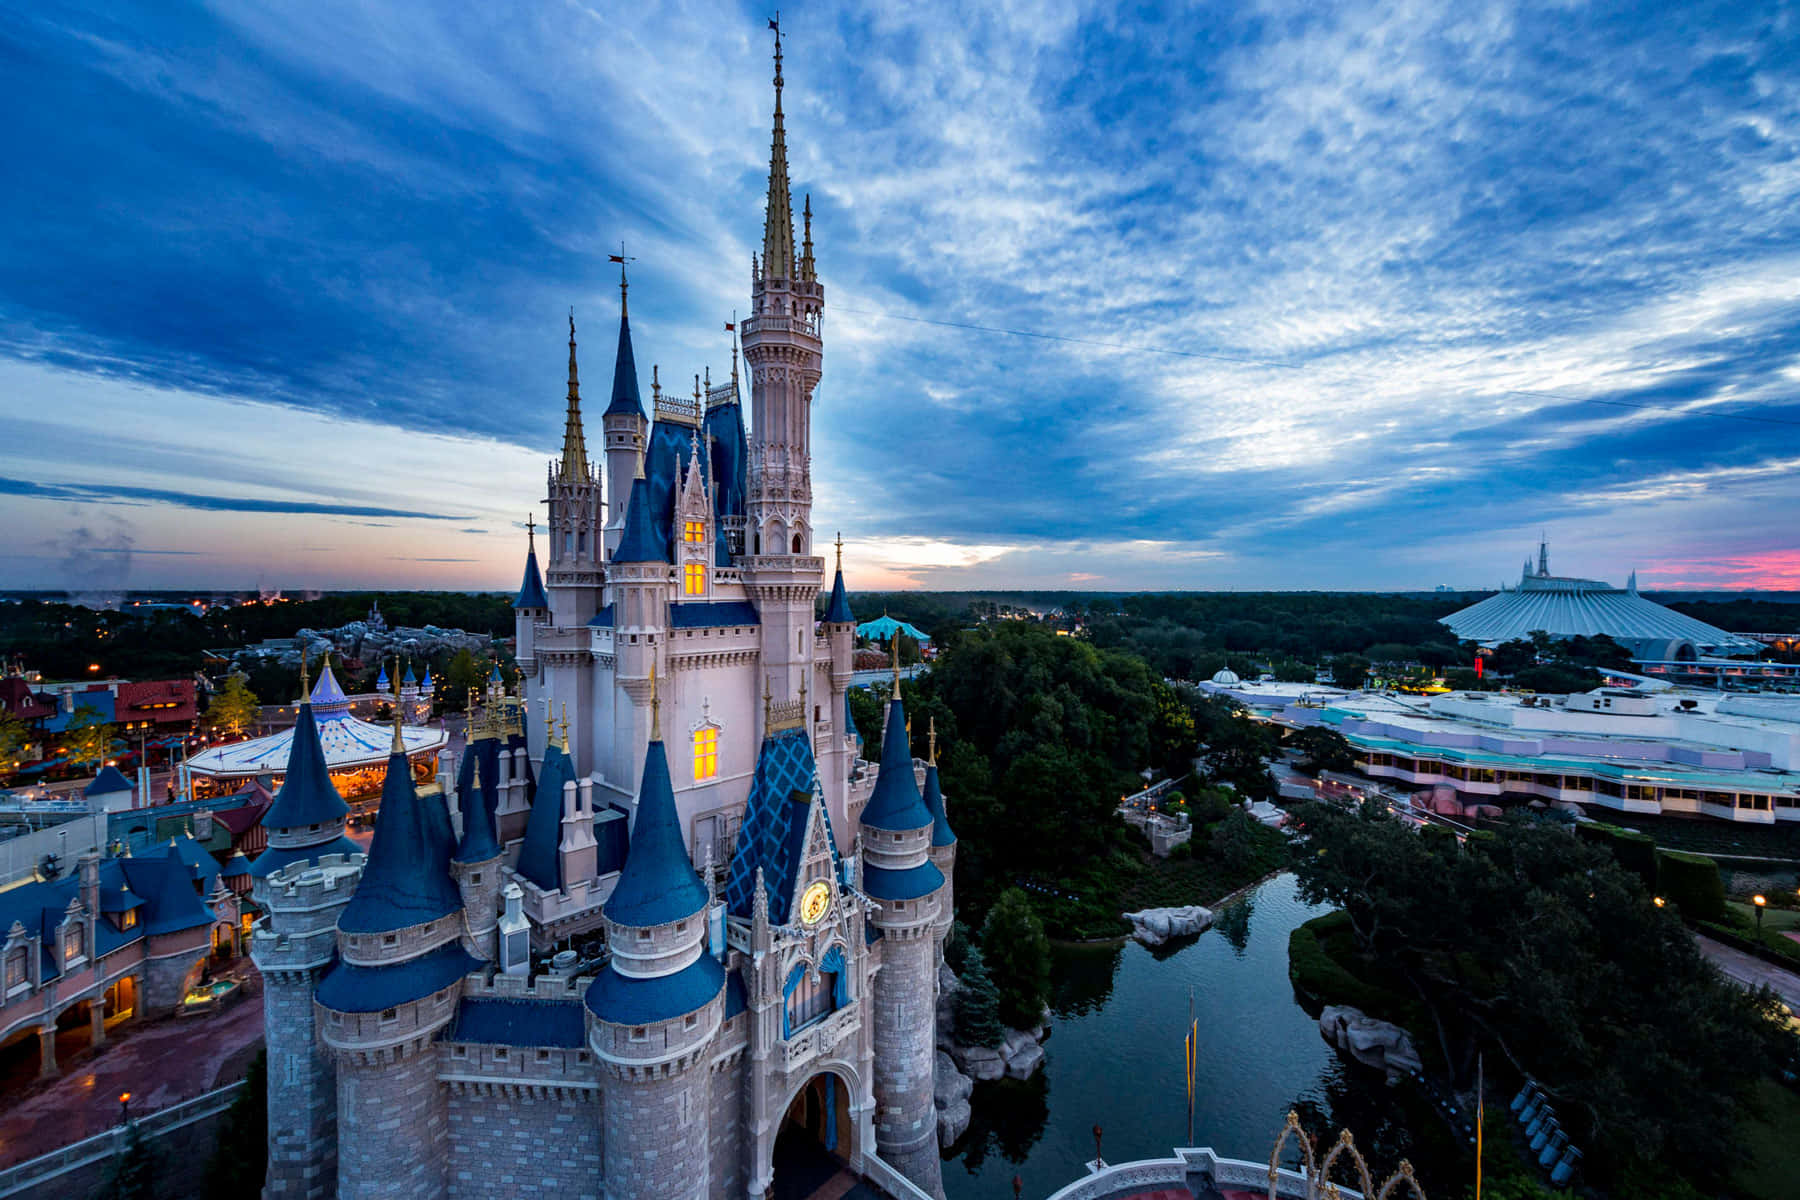 Make Magical Memories at Disney World